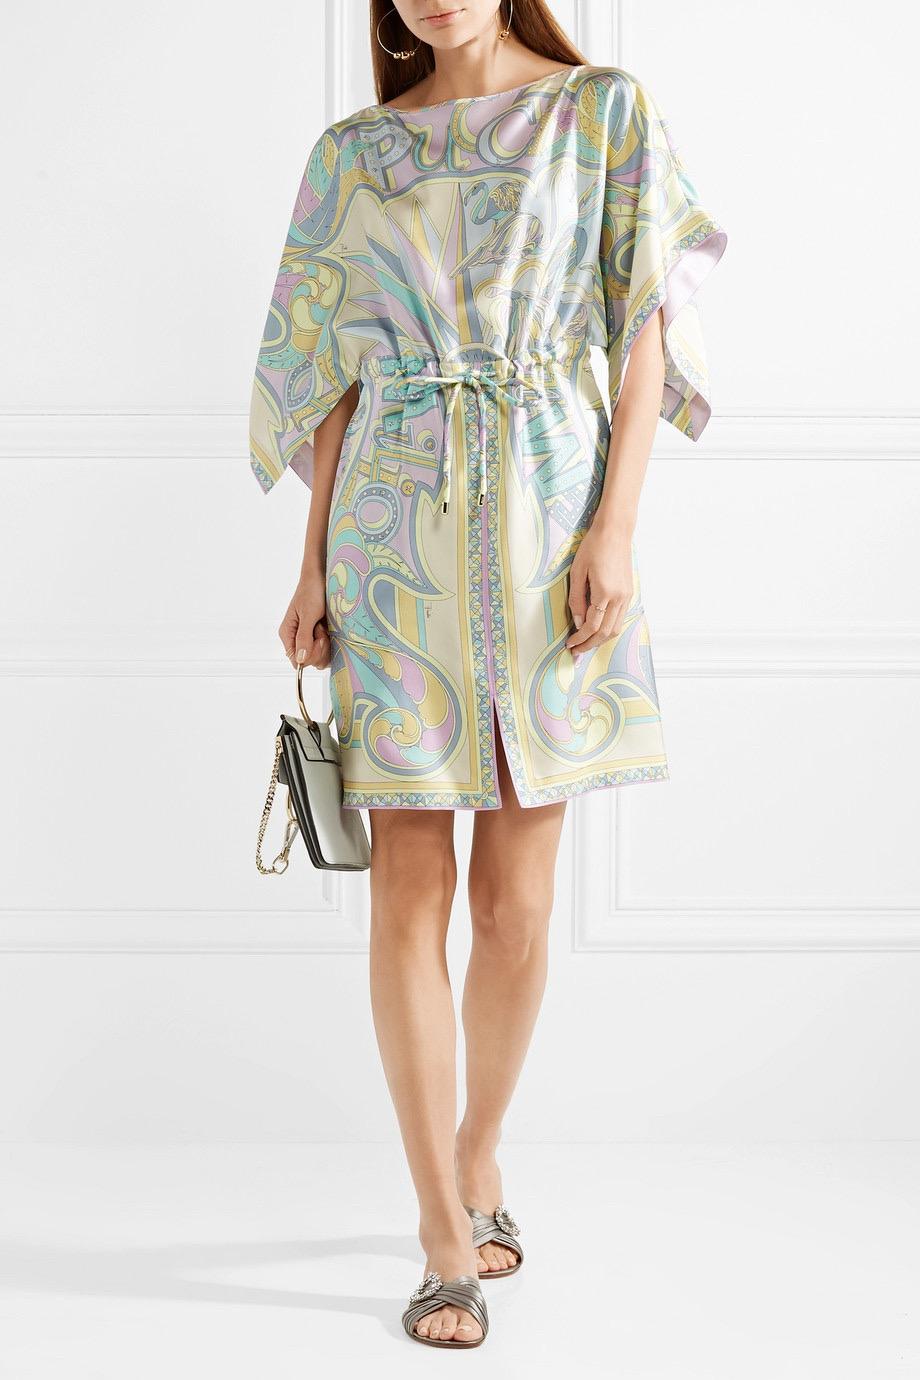 UNWORN Emilio Pucci Multicolor Signature Print Silk Twill Kaftan Tunic Dress 40 For Sale 3